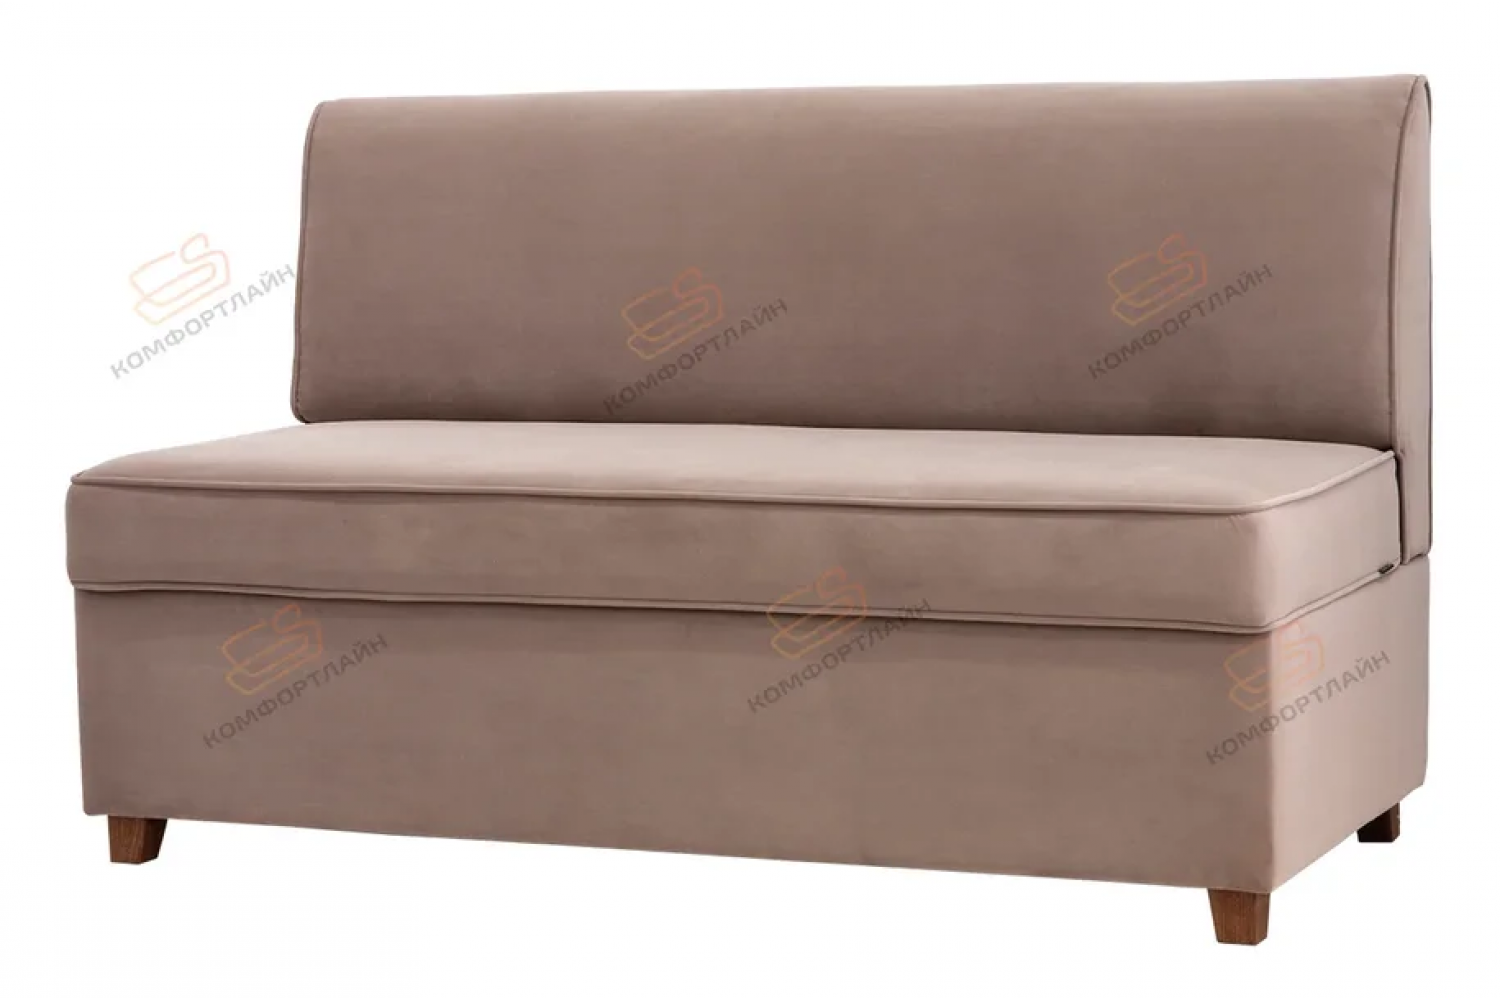 ✓ Прямой диван для кухни Консул - цена от 16 650 руб от производителя